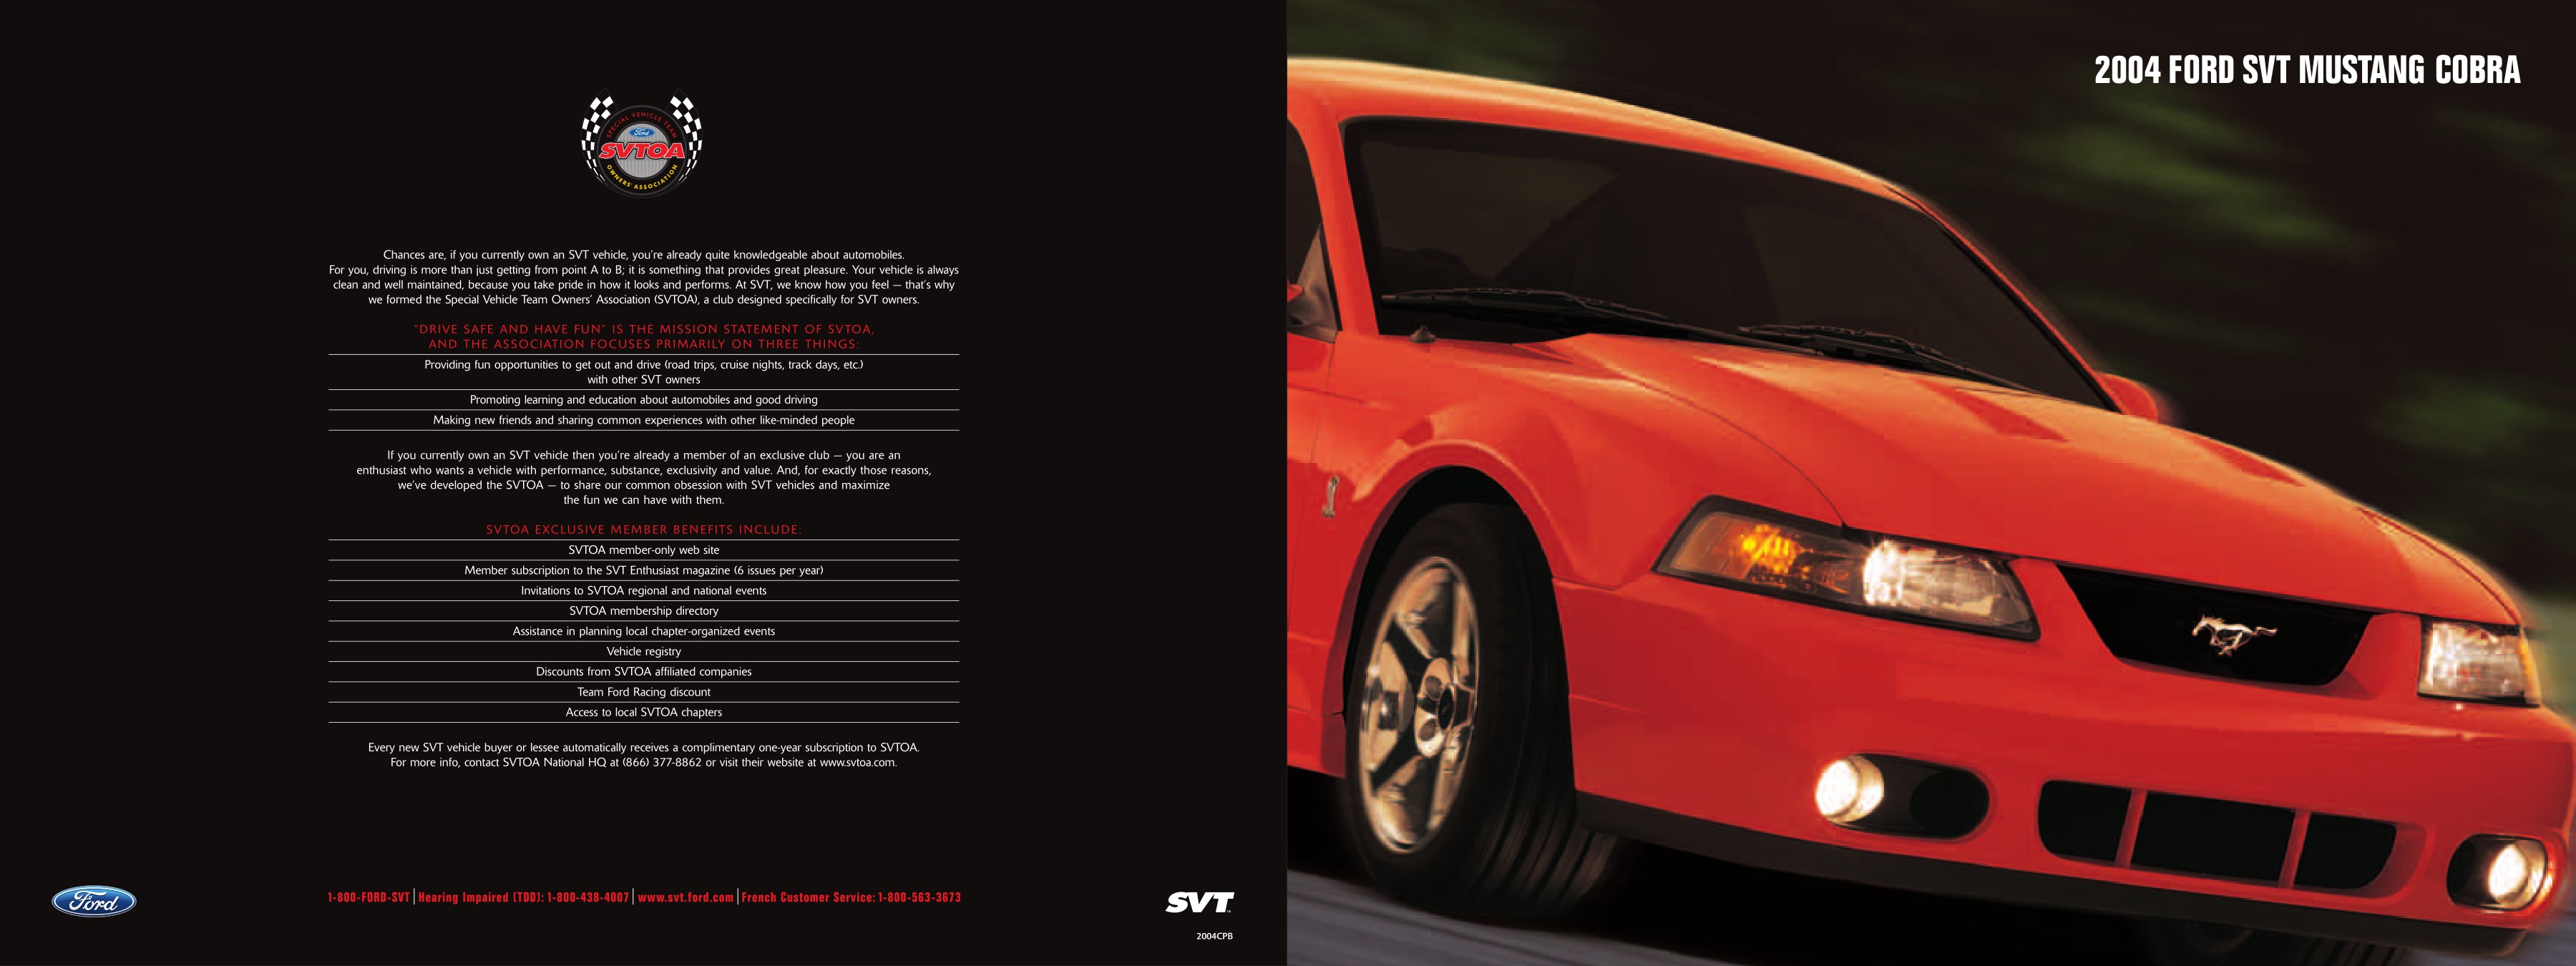 2004 Ford Mustang Cobra Brochure